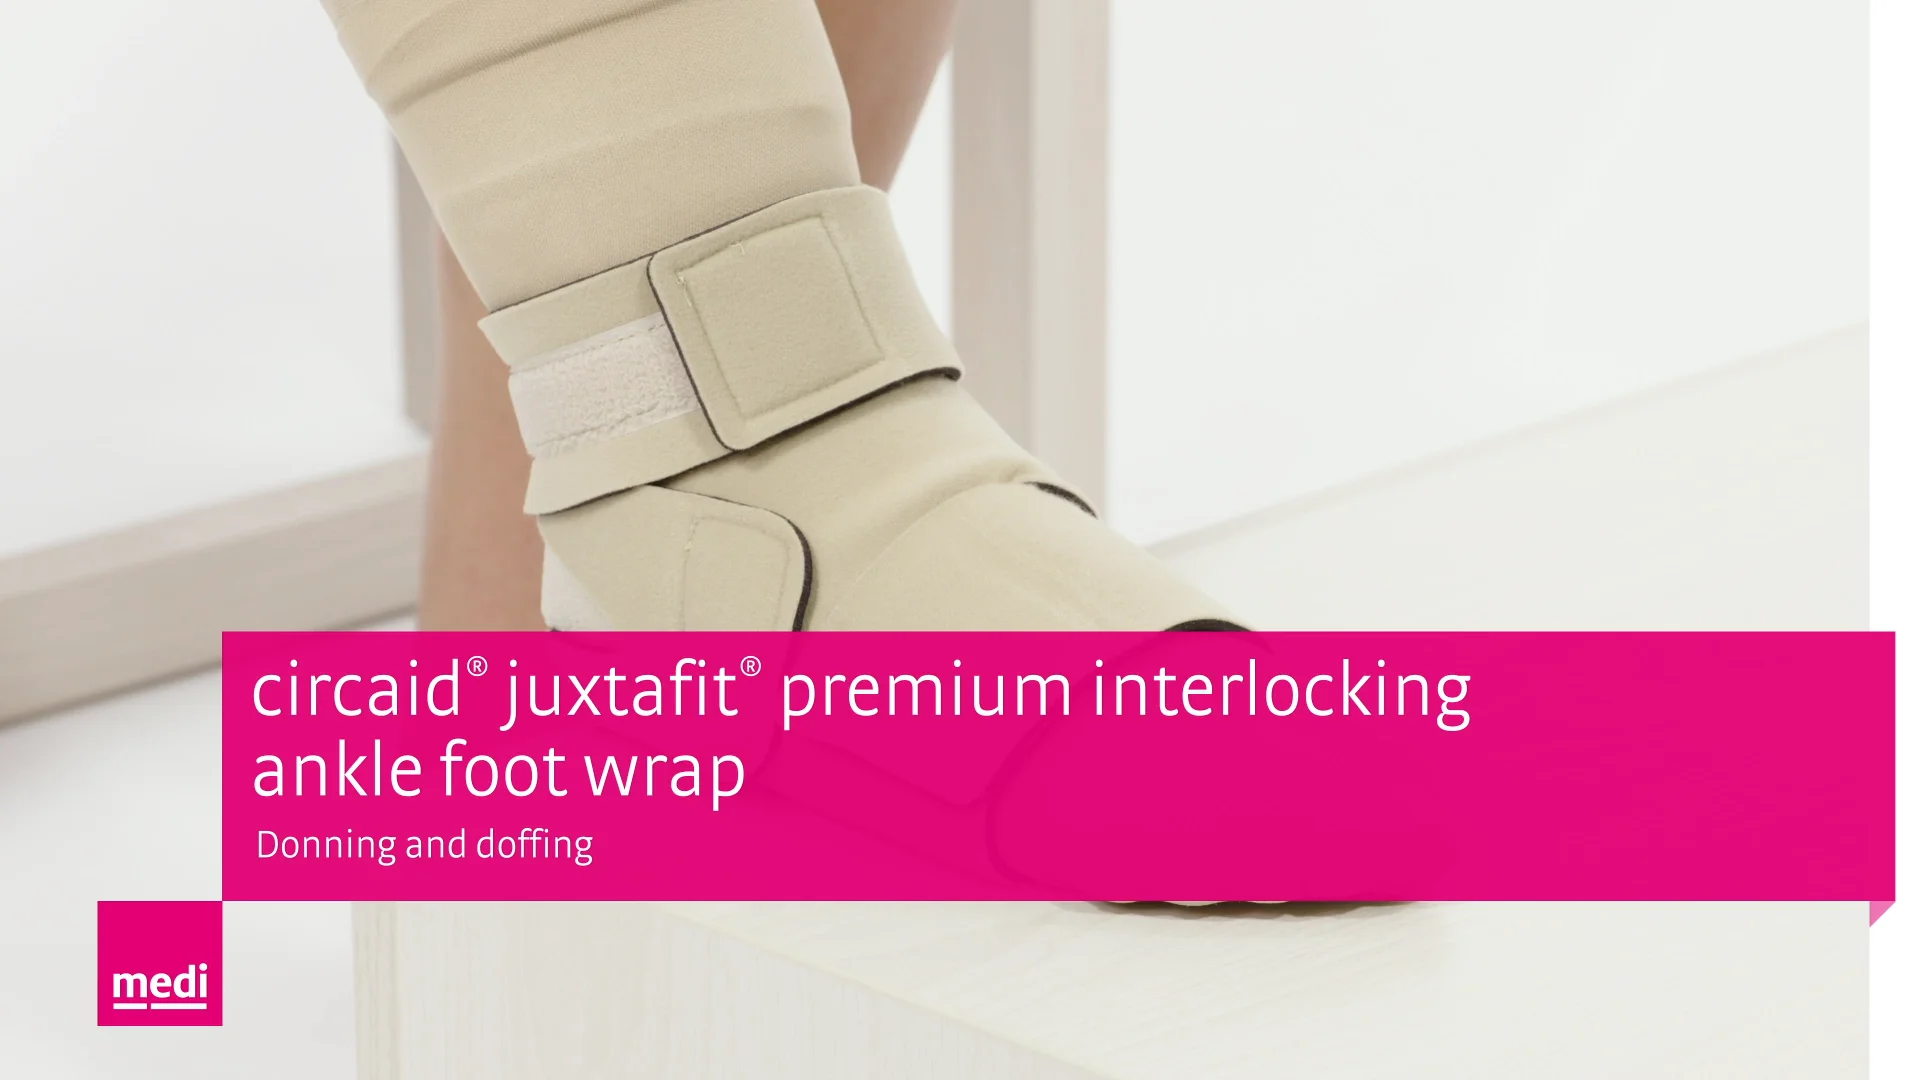 CircAid Juxtafit Premium Interlocking Ankle-Foot Wrap - Compression Health